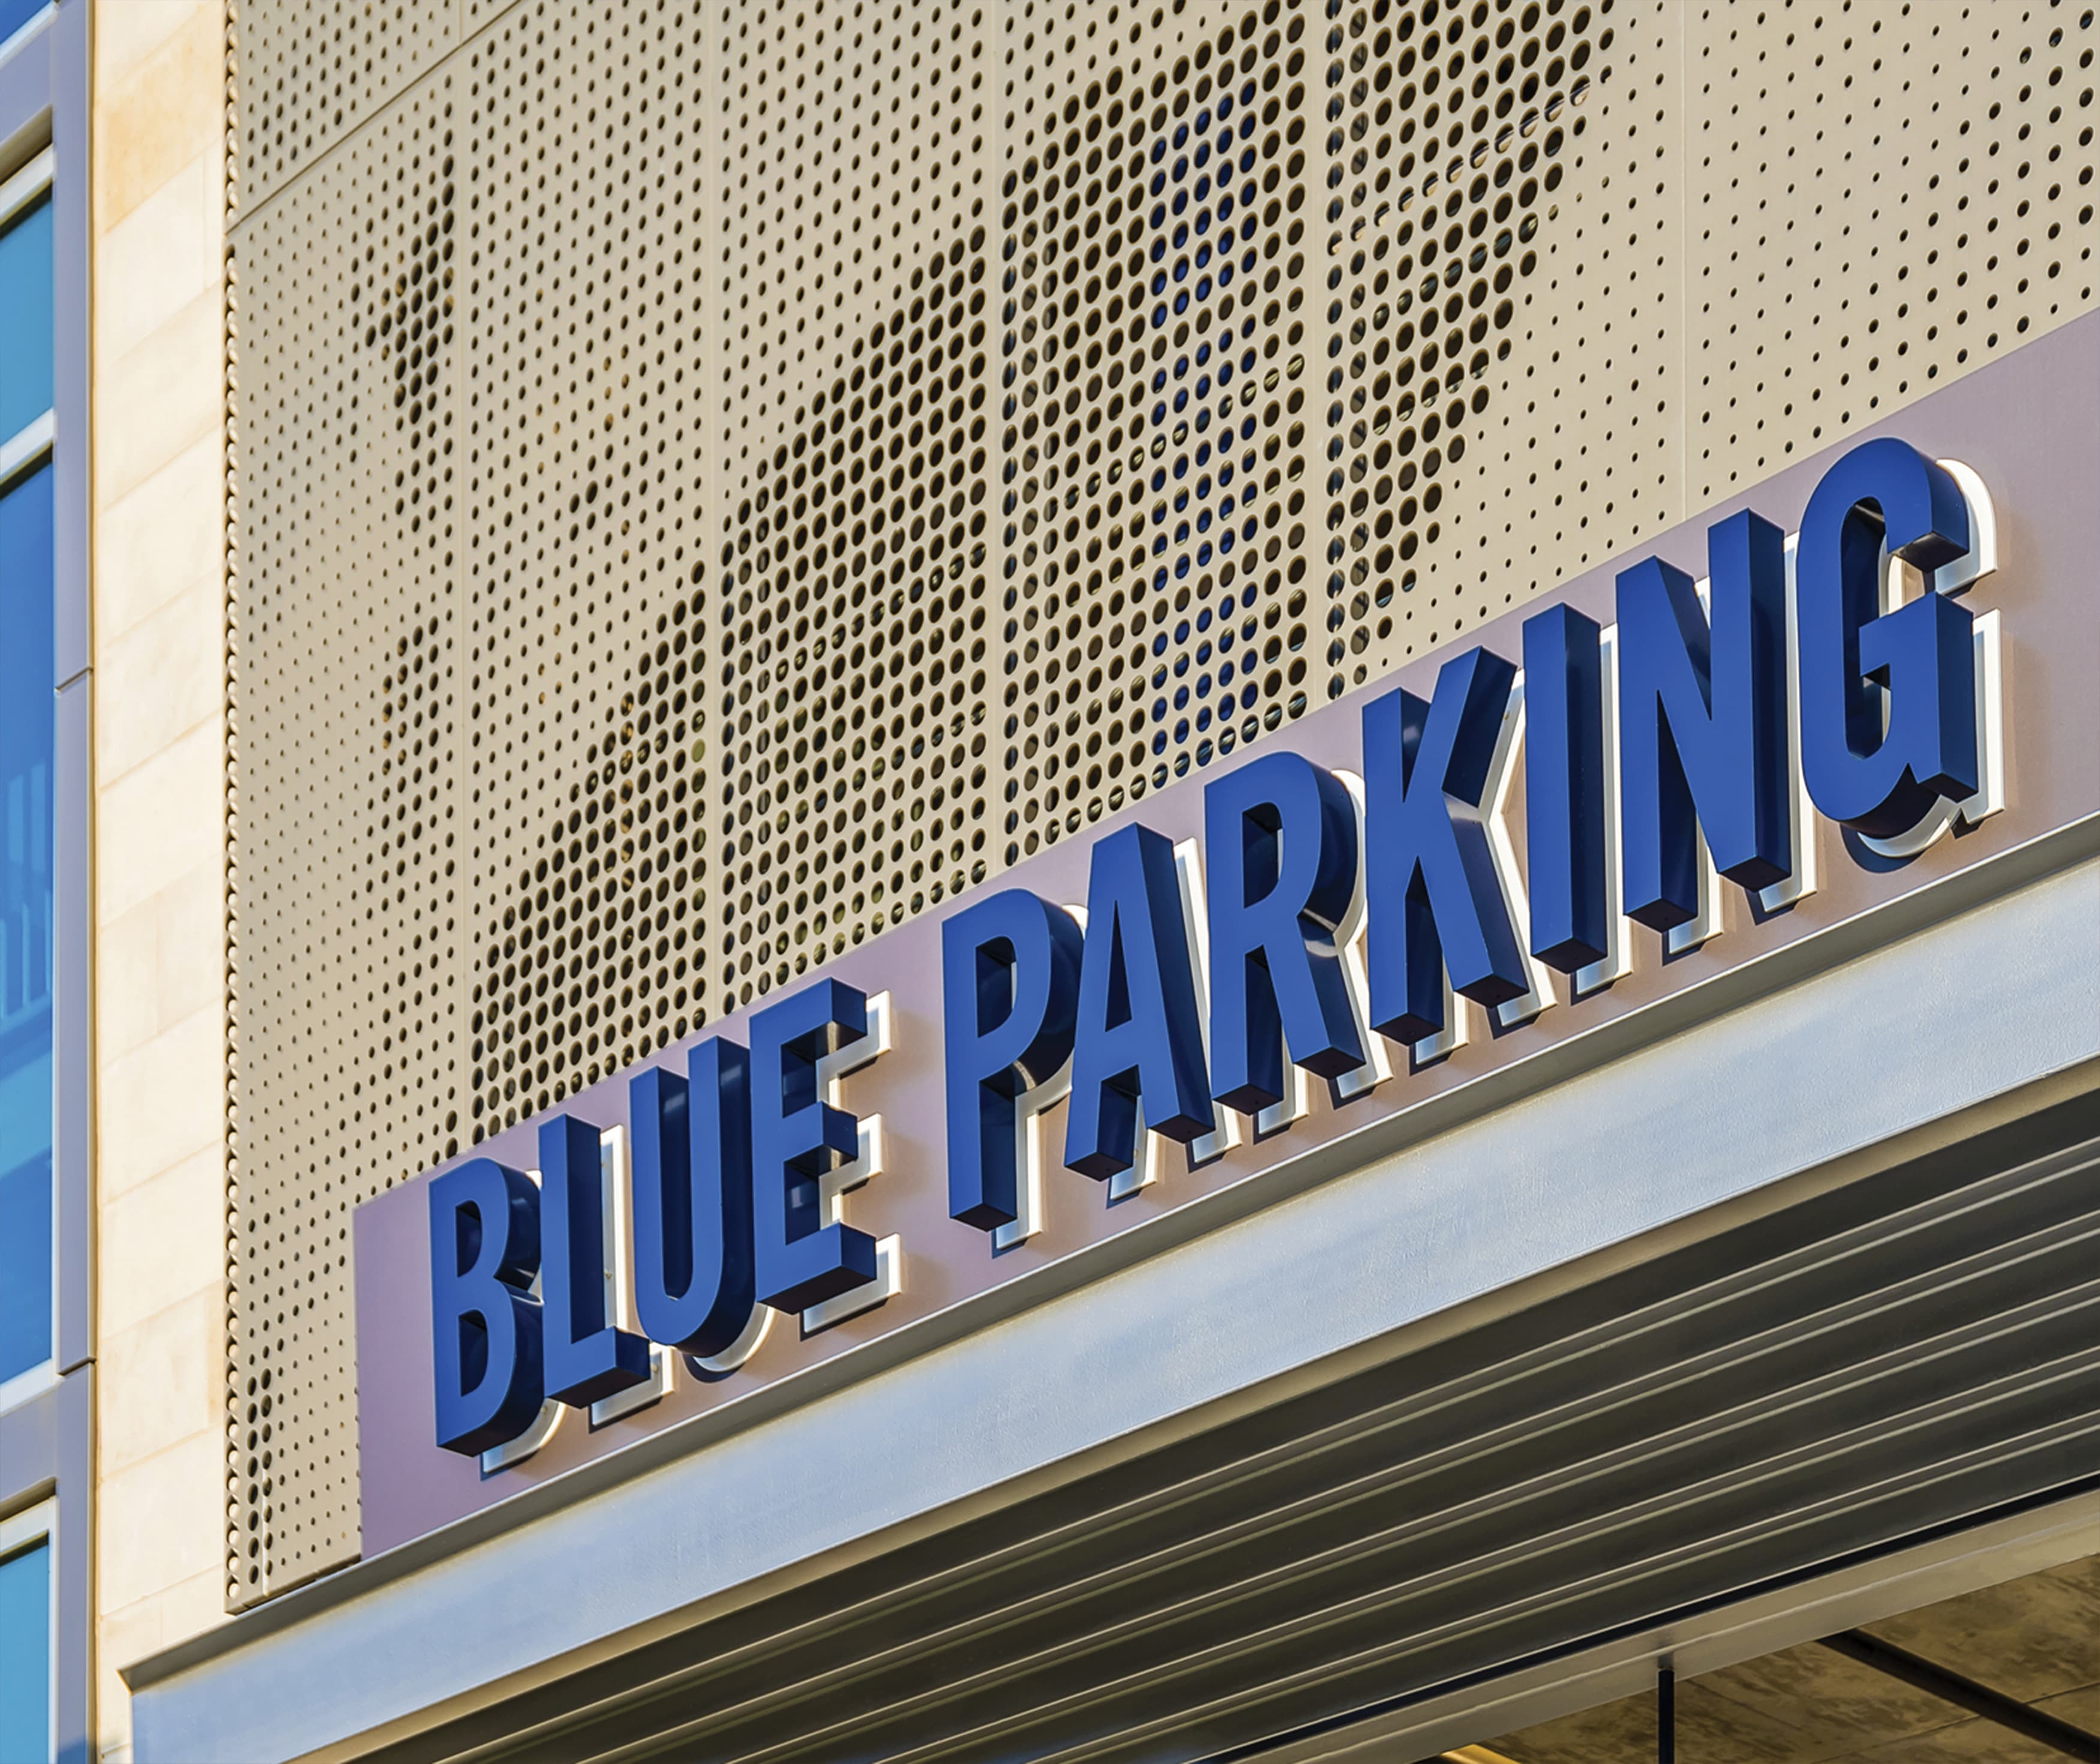 The Star Dallas Cowboys parking signage